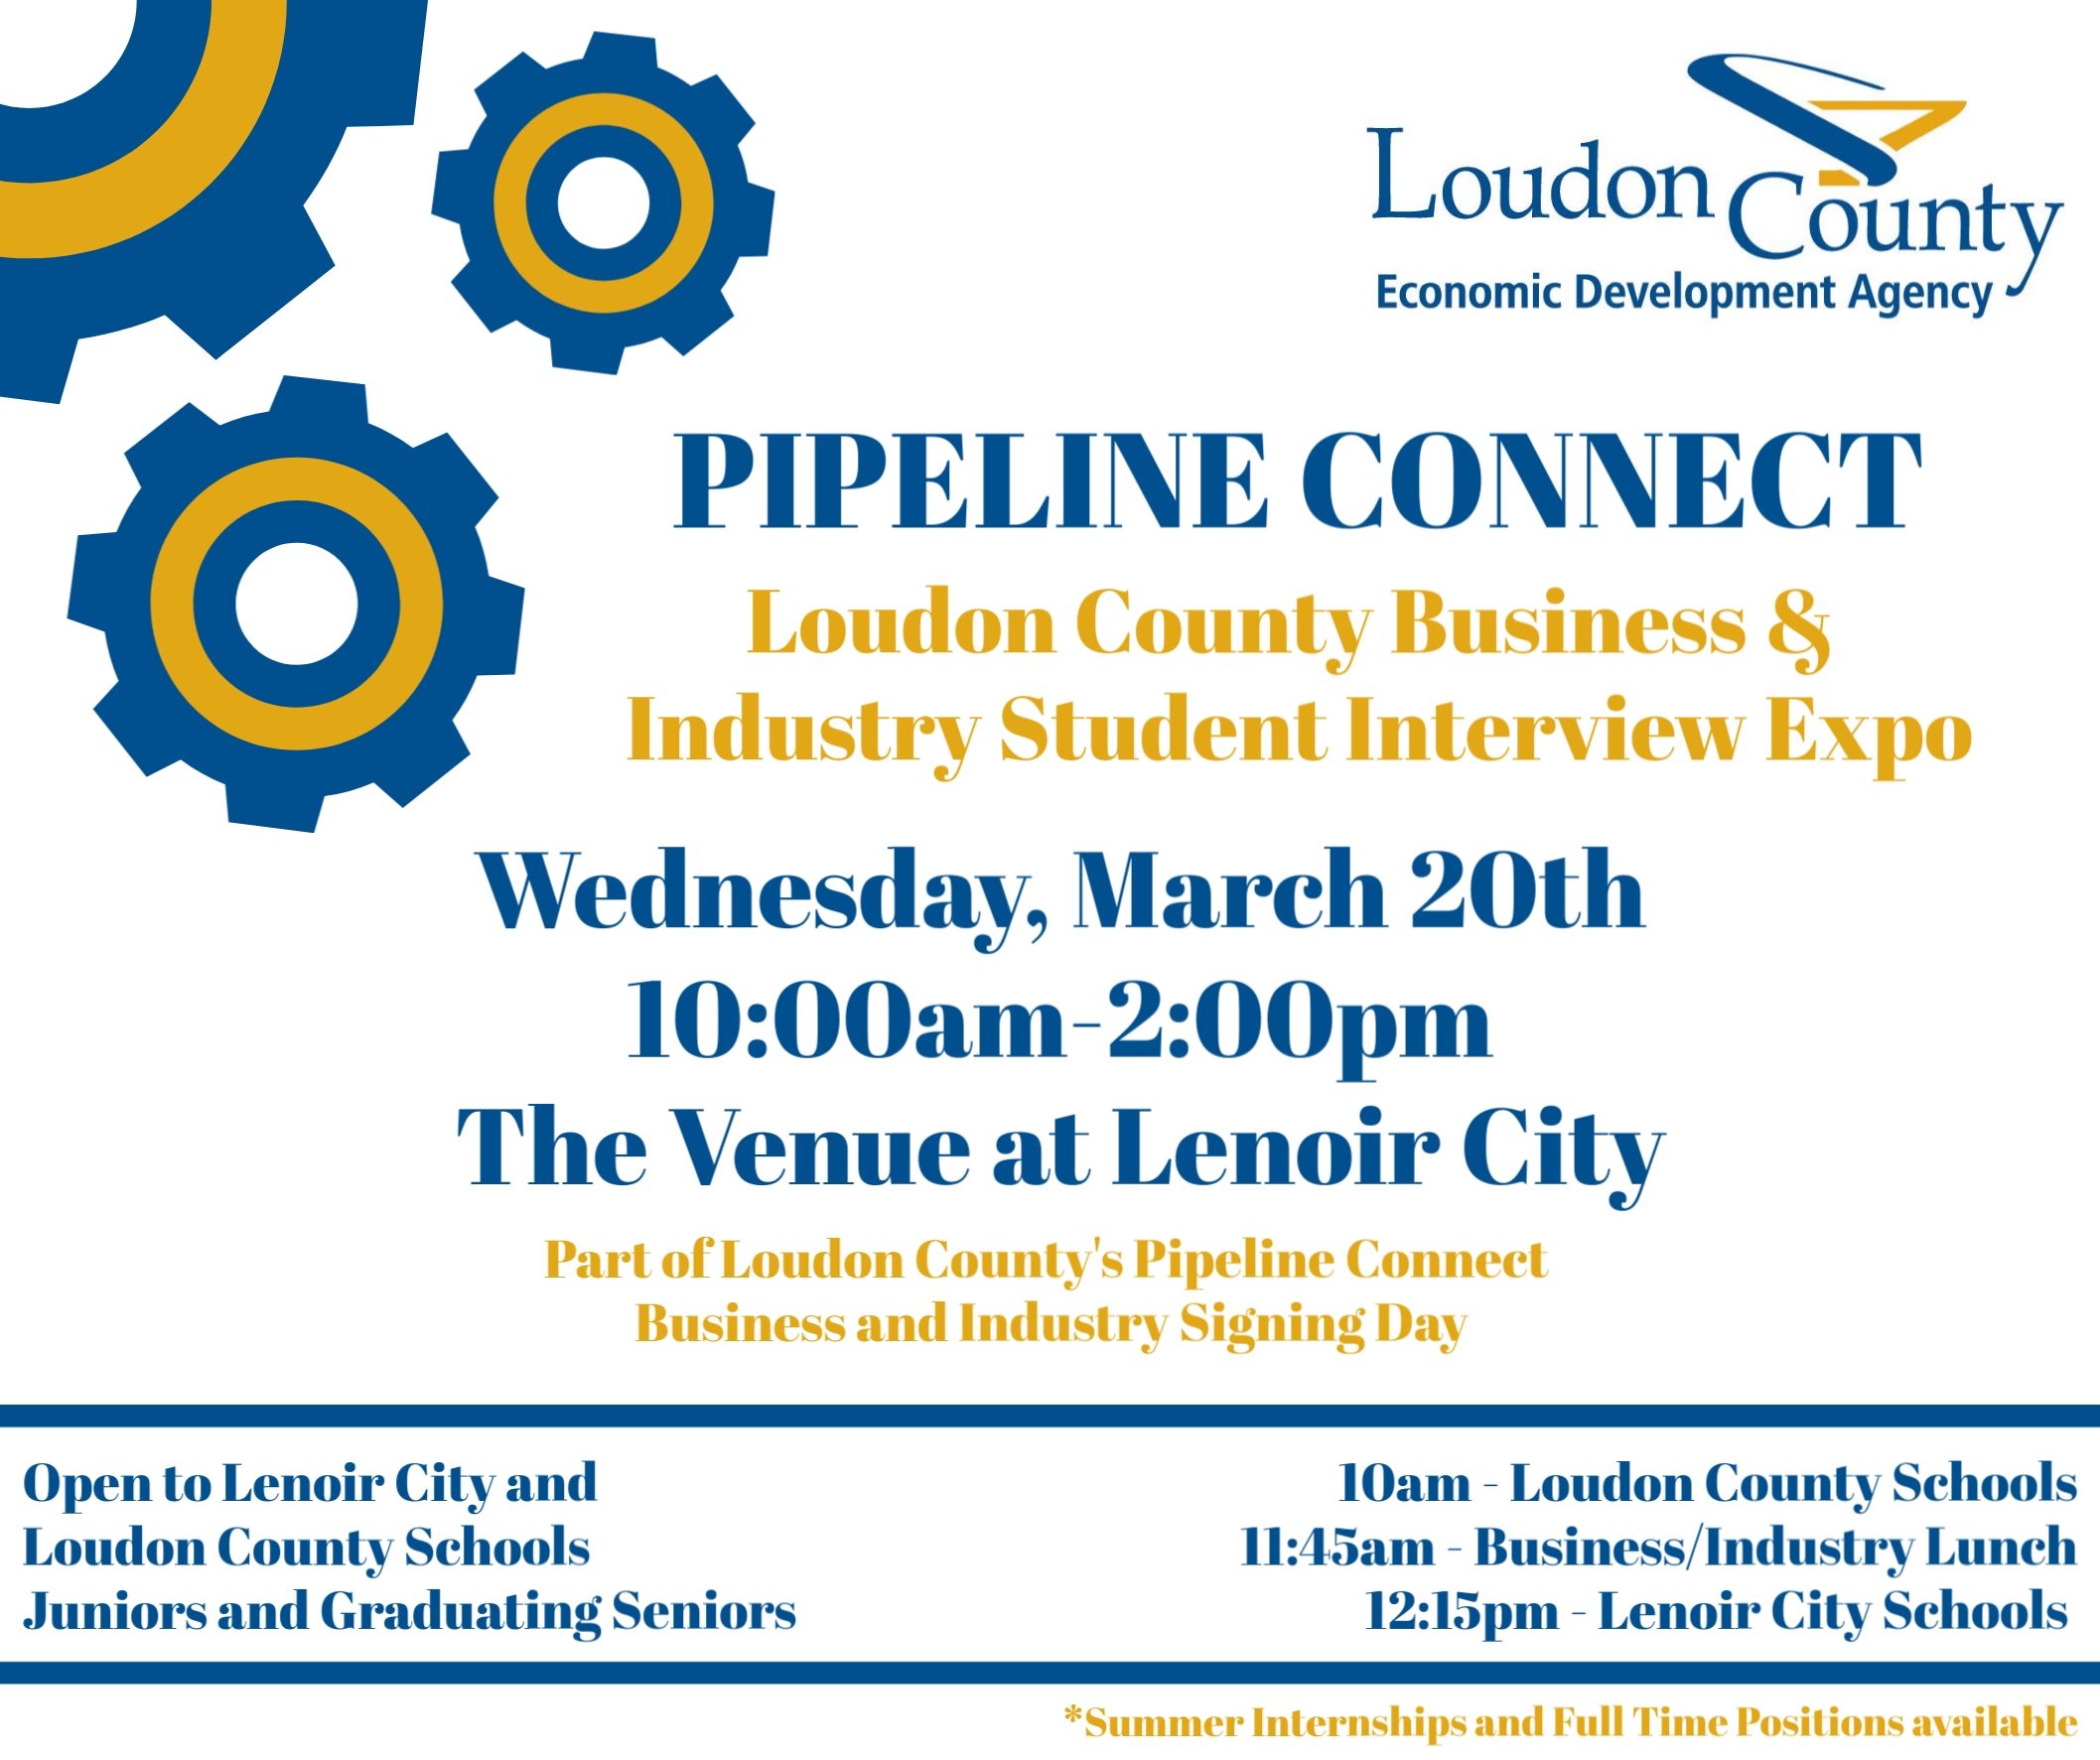 Pipeline Connect Loudon County Economic Development Agency 4518